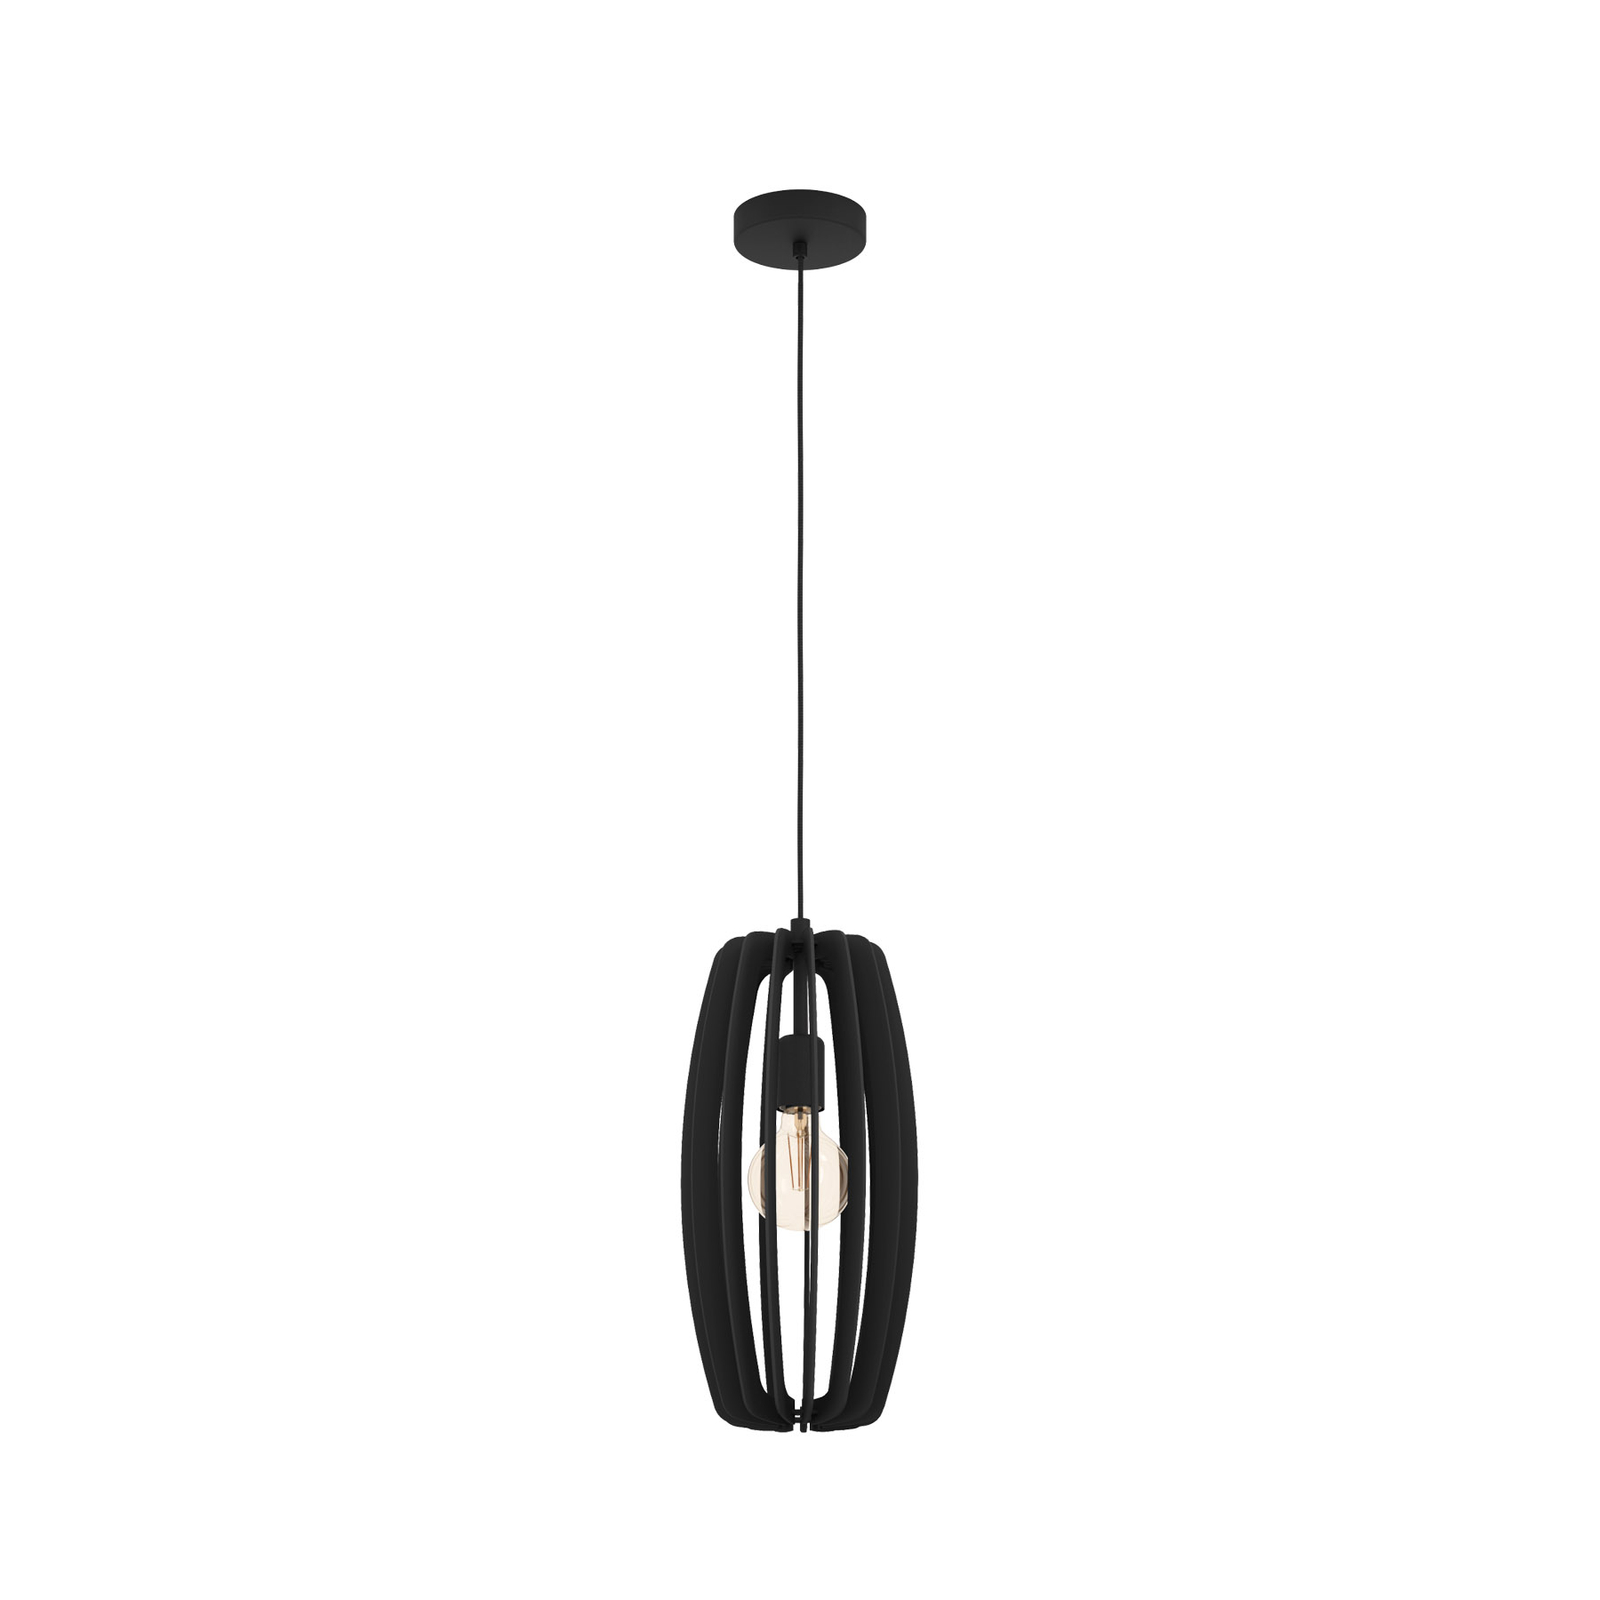 Bajazzara pendant light, one cage shade, black